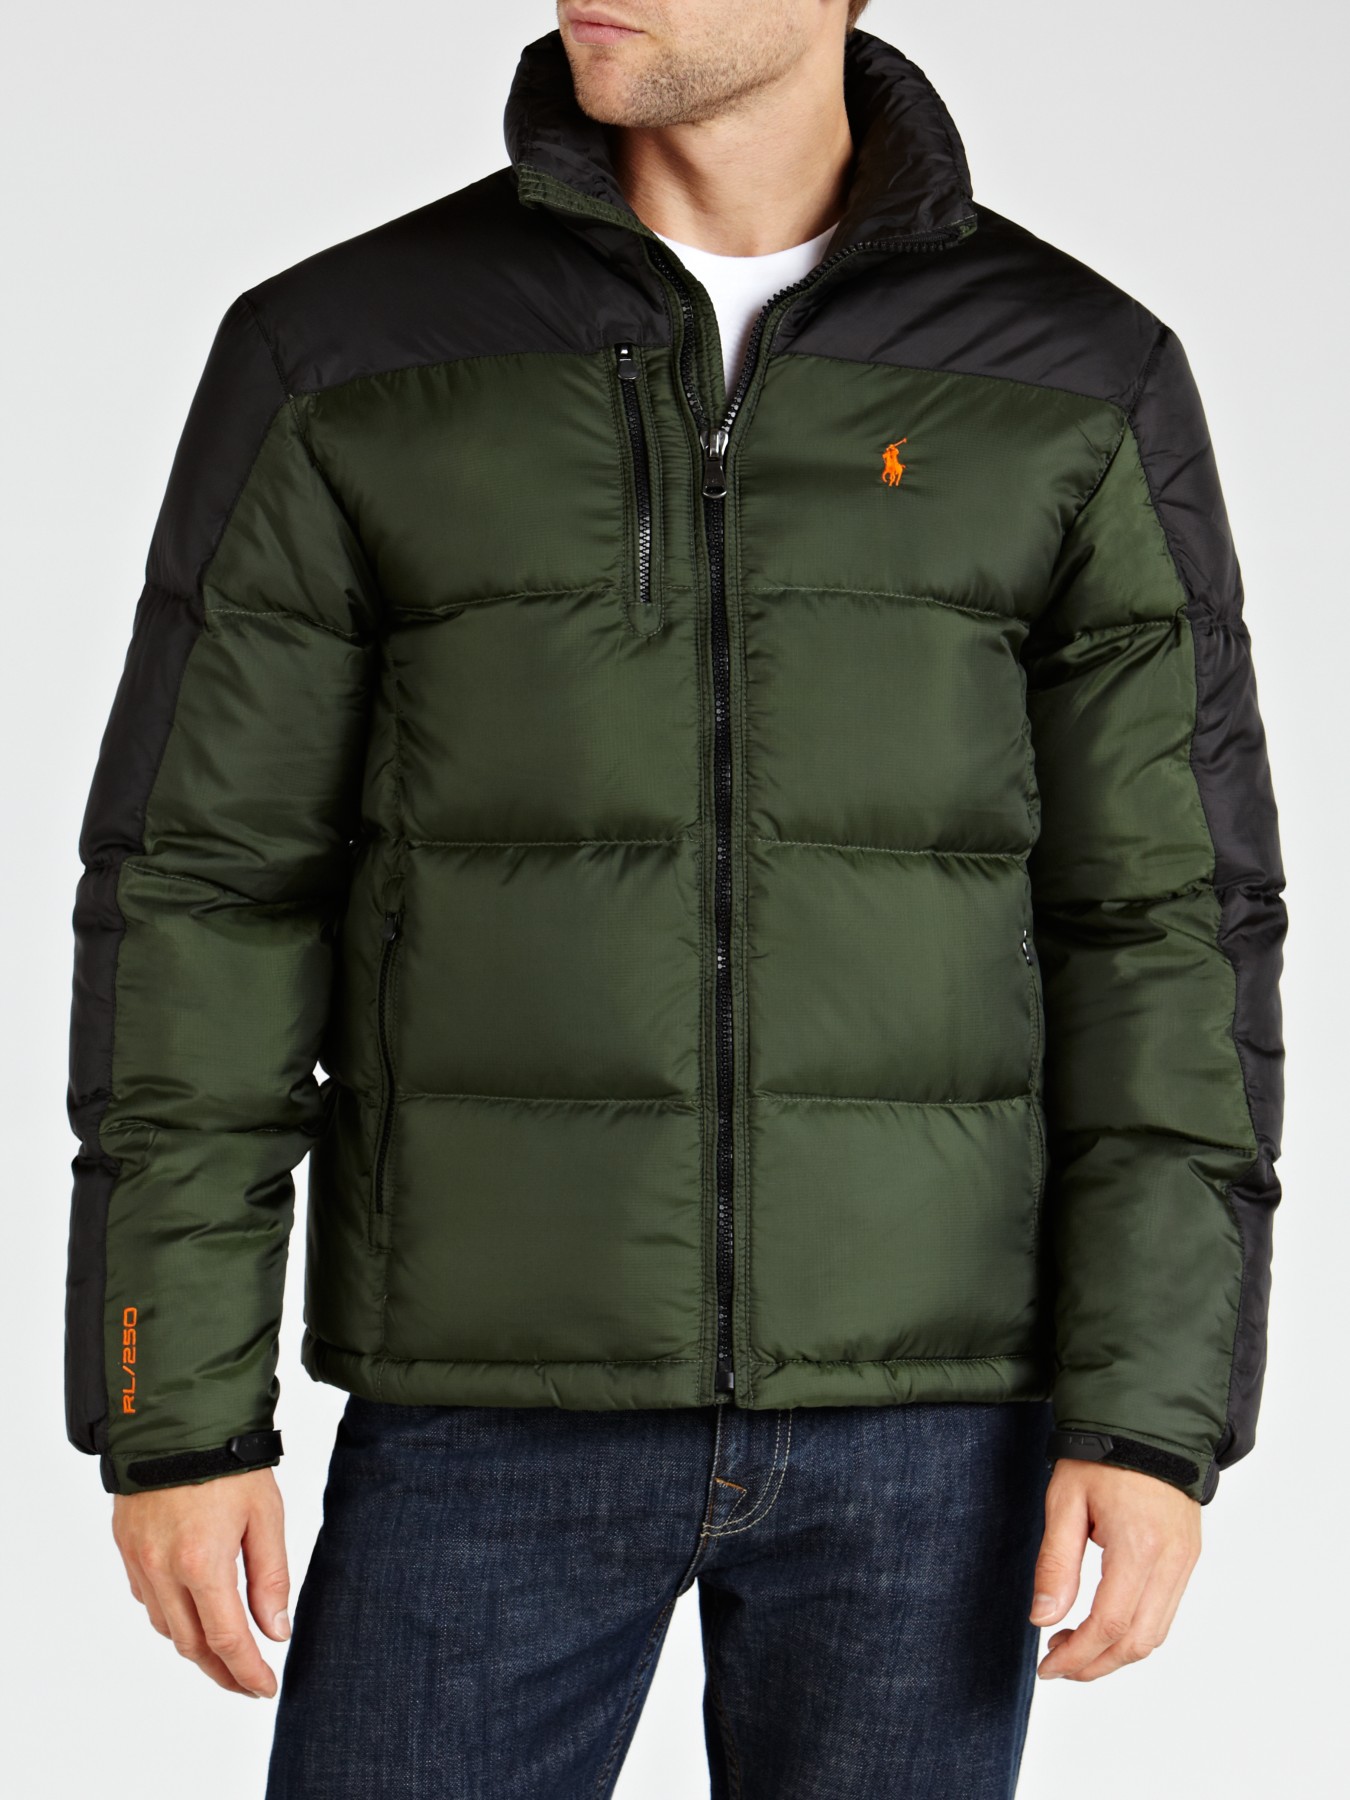 Polo Ralph Lauren Trek Puffer Jacket in Green for Men - Lyst